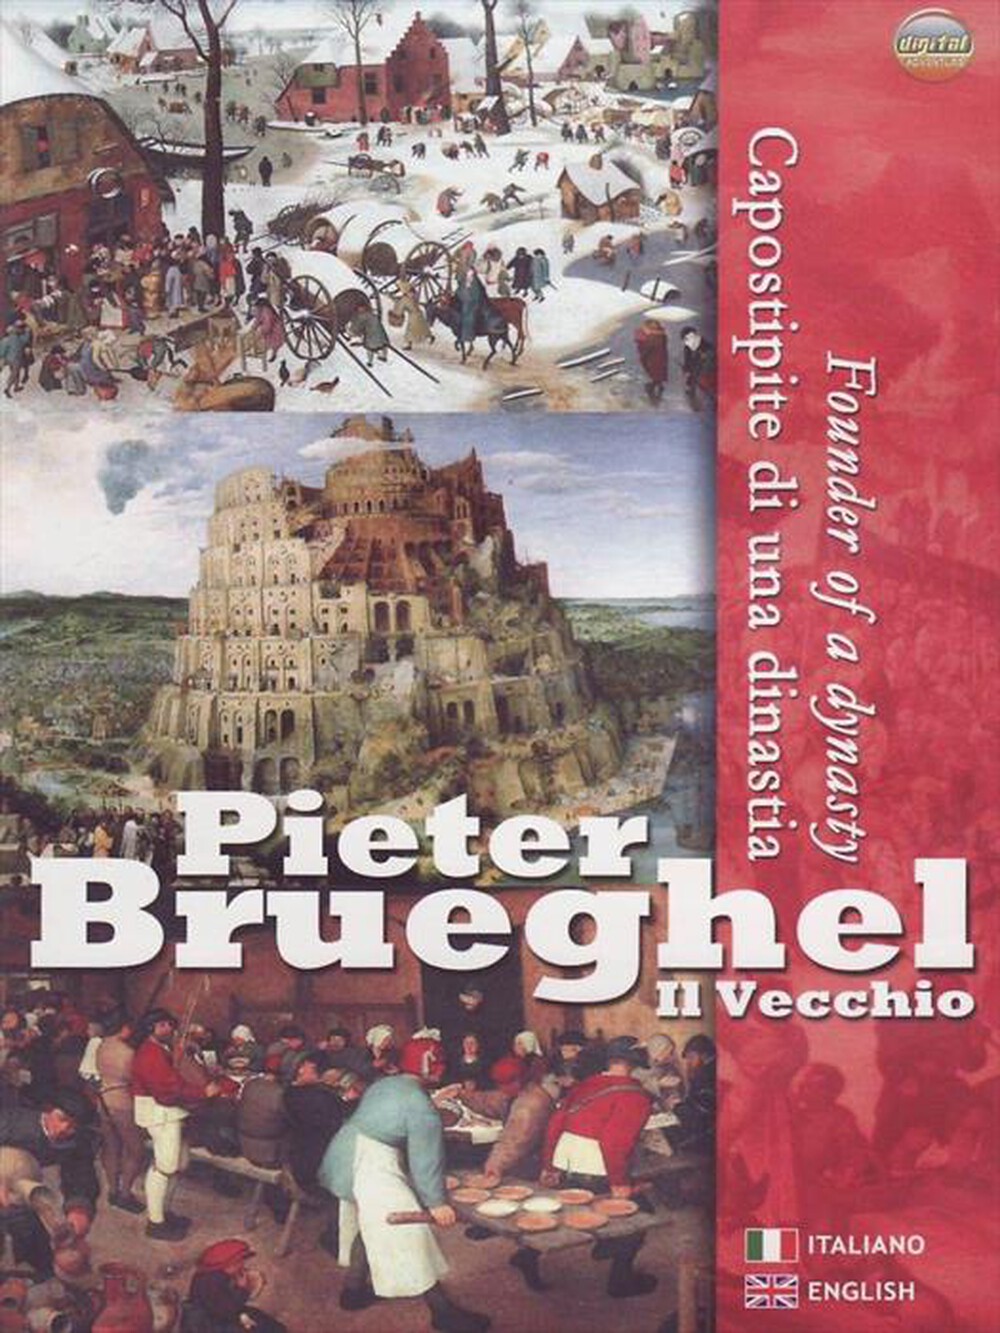 "CINEHOLLYWOOD - Pieter Brueghel Il Vecchio - "